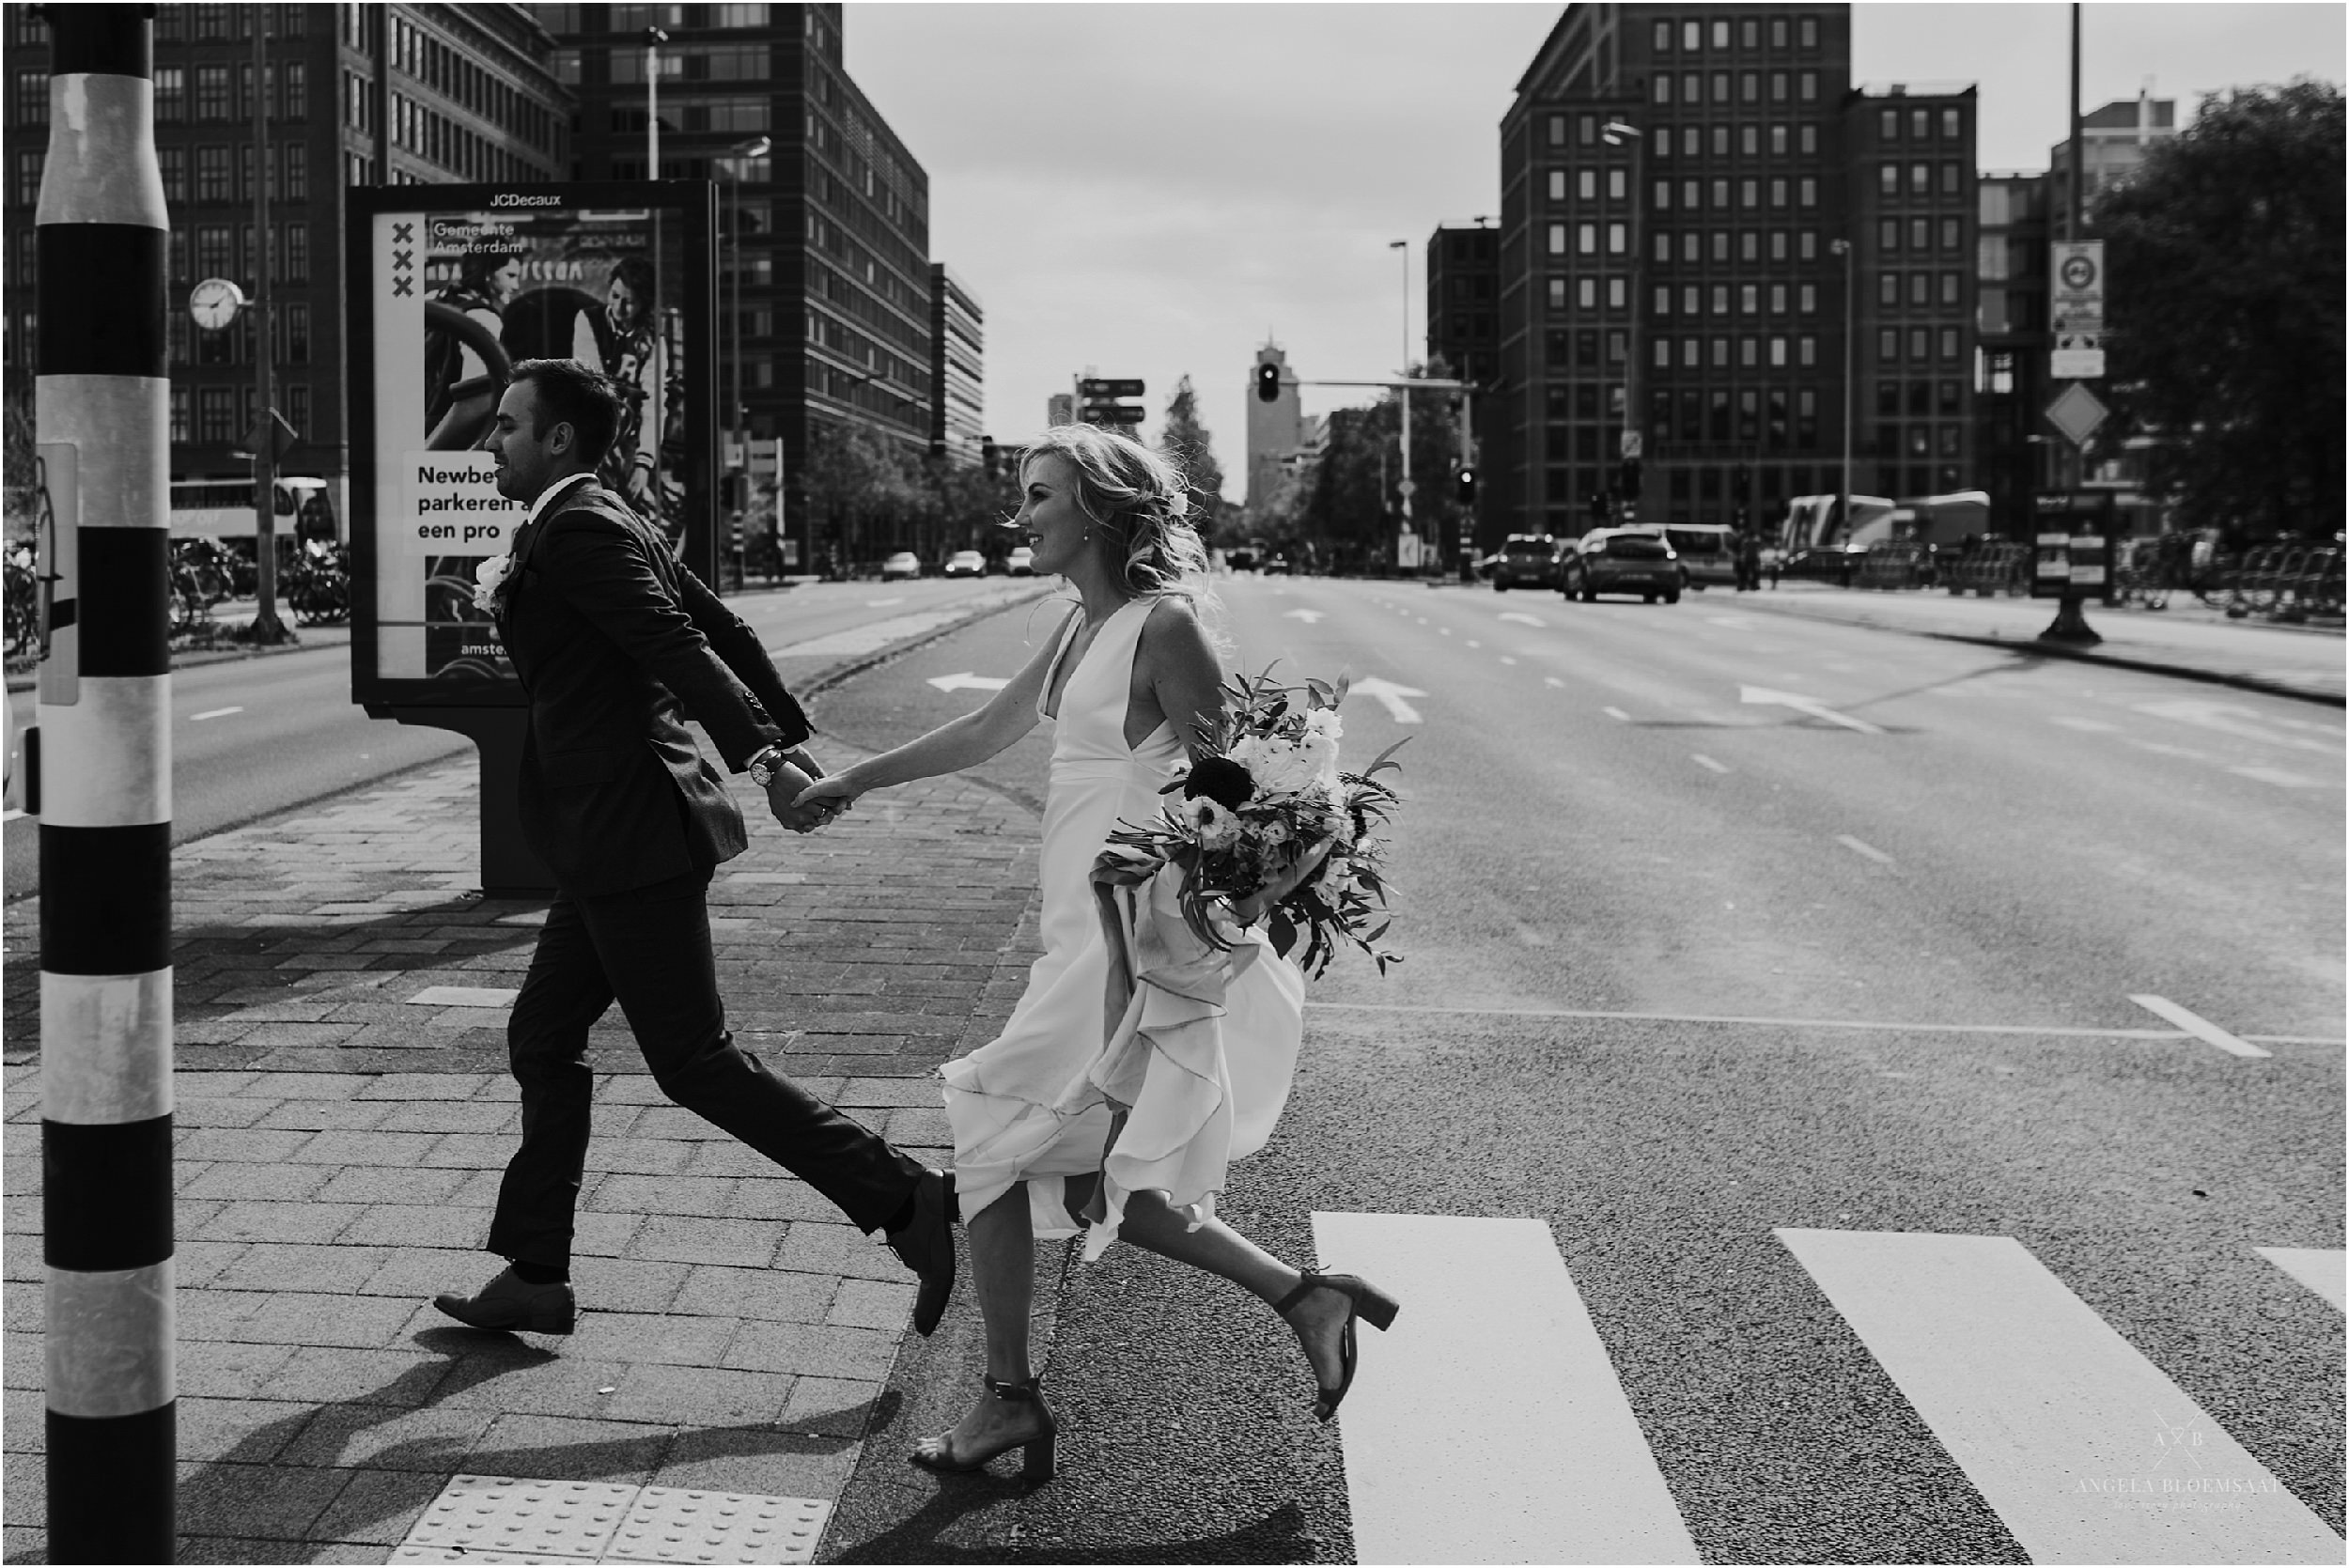 Wedding photographer Amsterdam Netherlands - bruiloft trouwen fotograaf - Angela Bloemsaat Love Story Photography